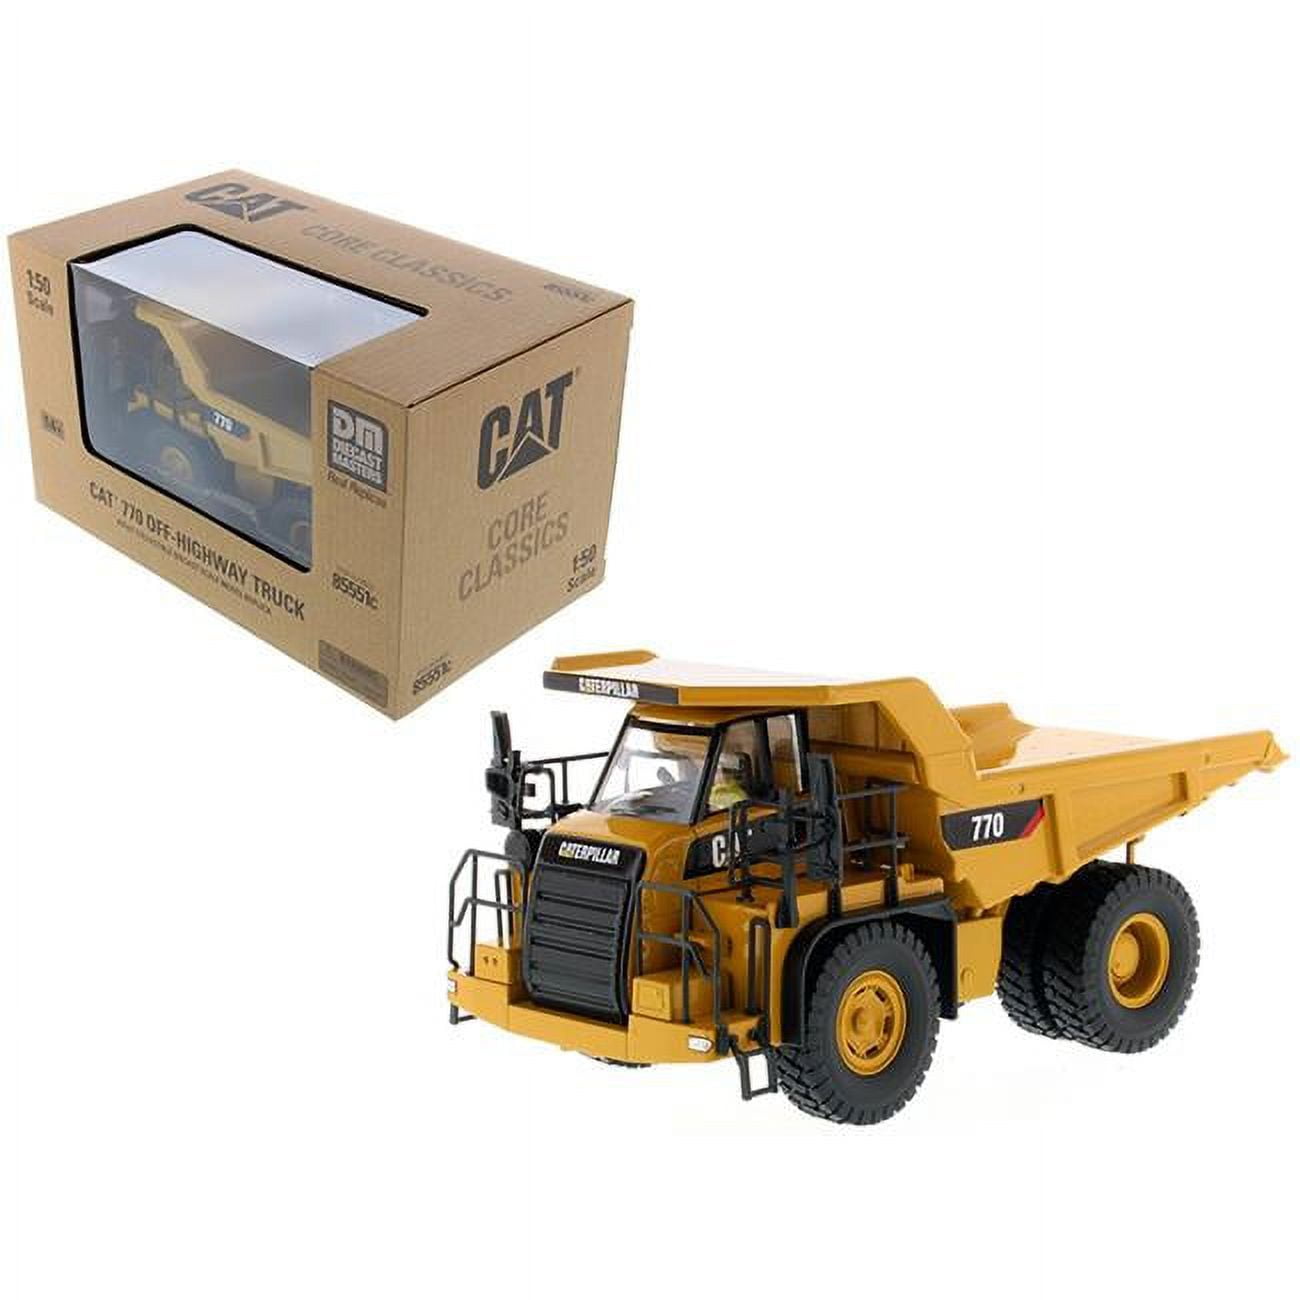 85551c Cat Caterpillar 770 Off Highway Dump Truck With Operator Core Classics Series 1-50 Diecast Model